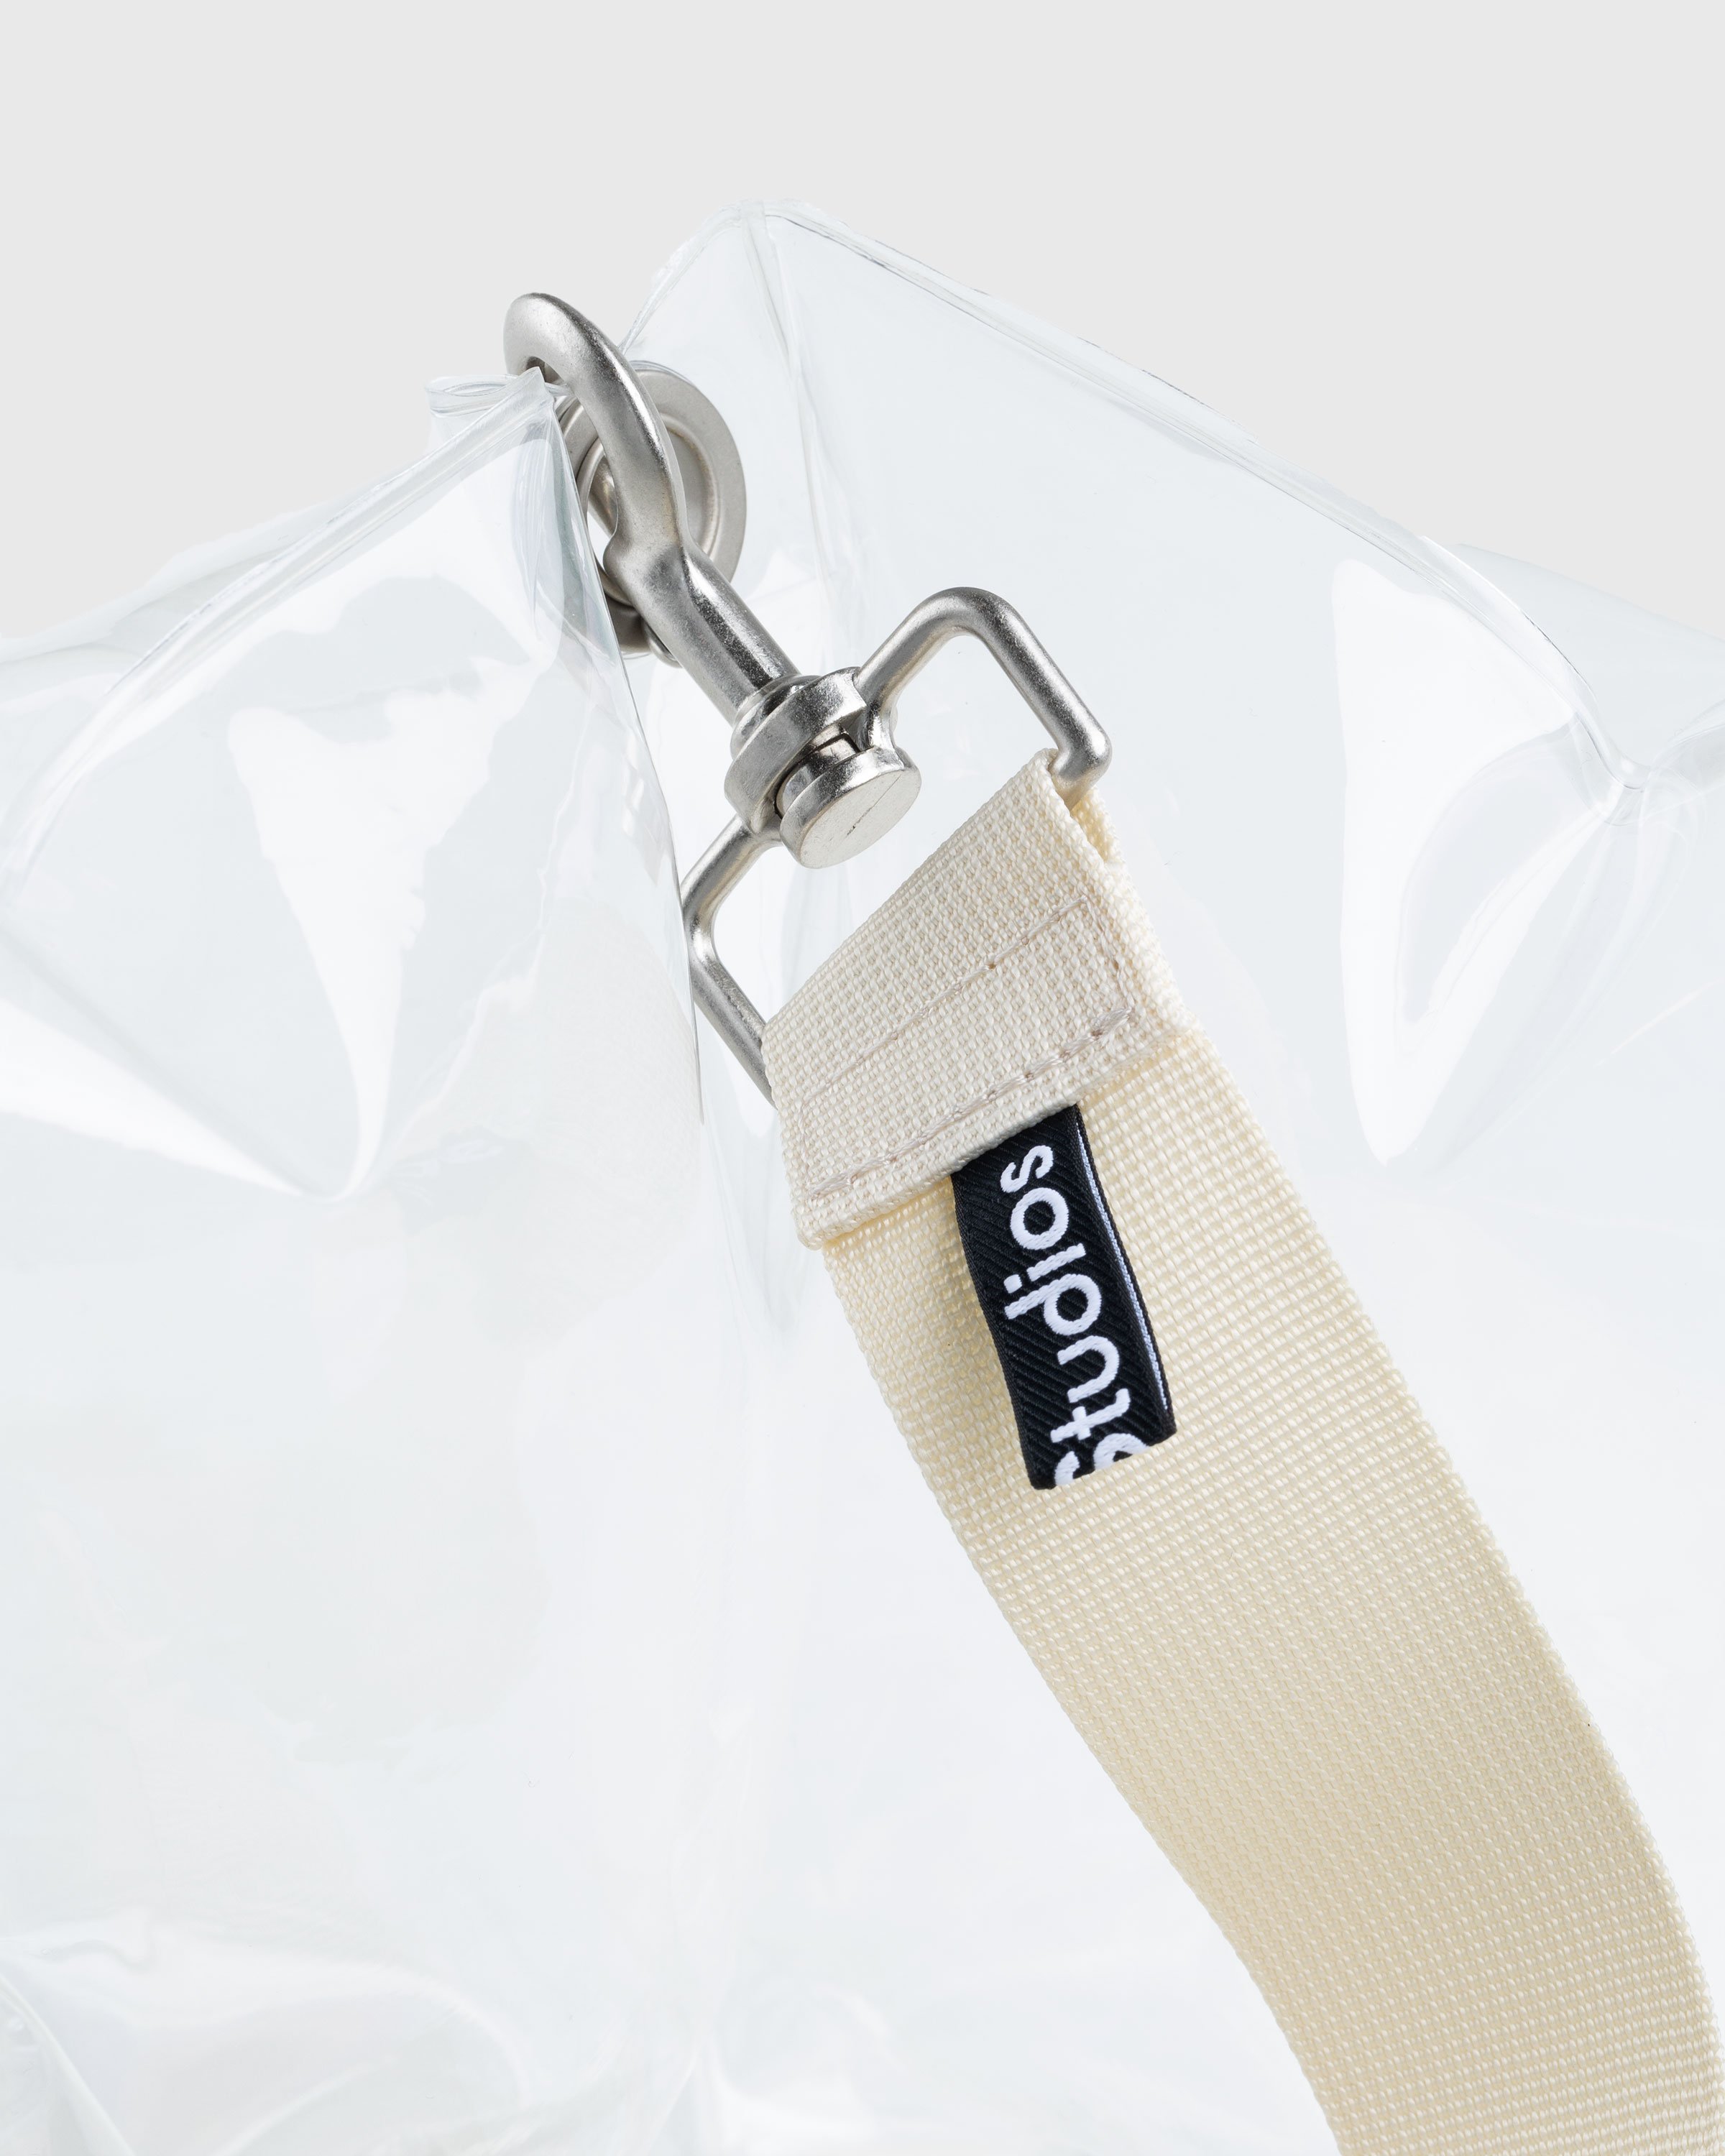 Acne Studios - Inflatable Tote Bag - Accessories - Multi - Image 7